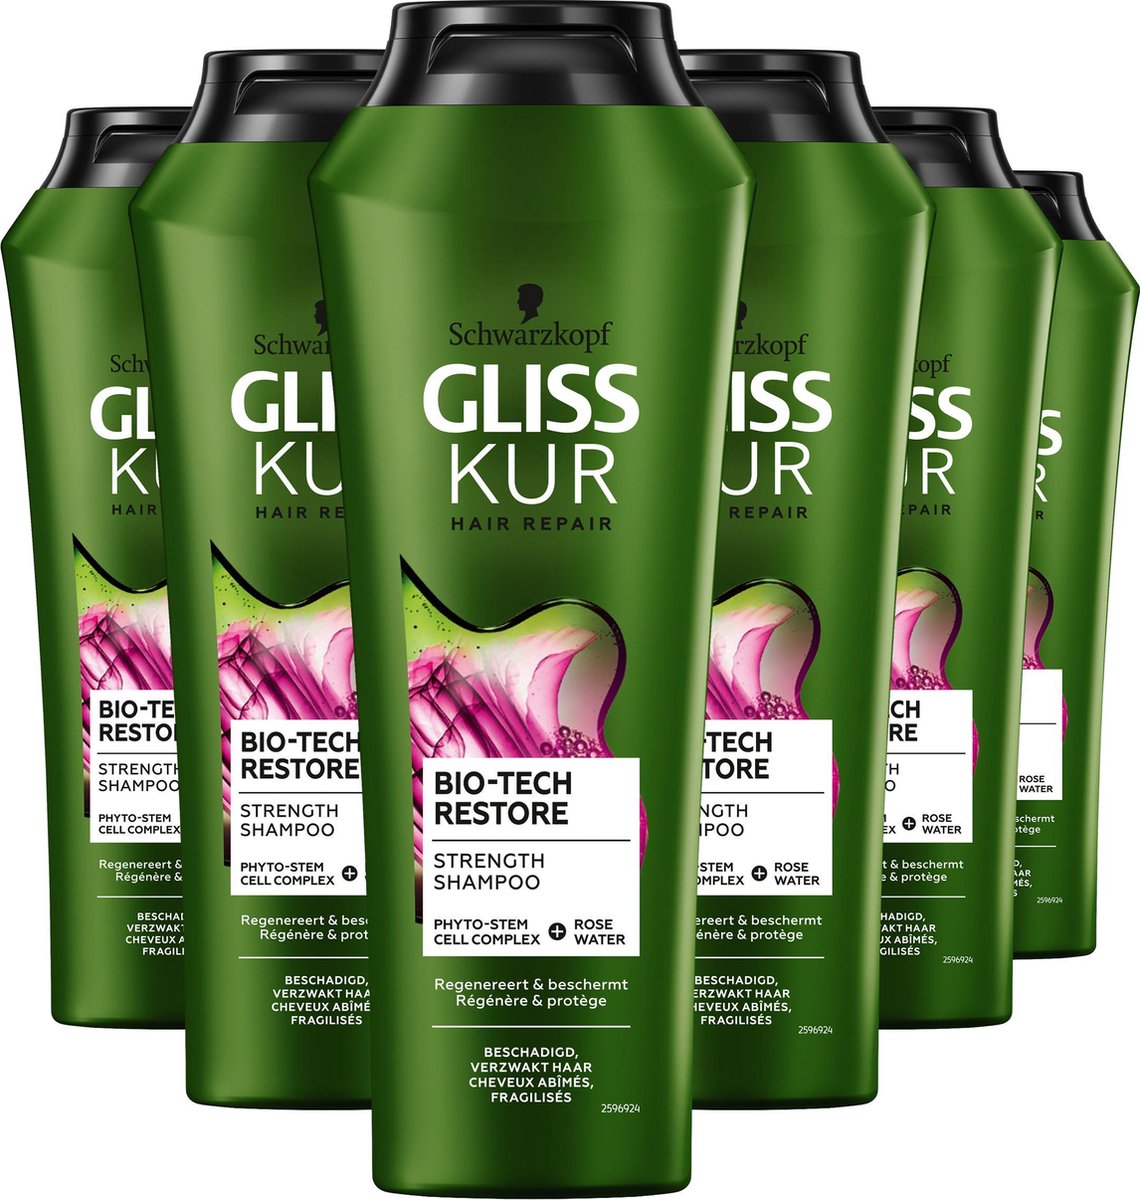 Gliss Kur BioTech Restore shampoo 6x 250 ml - Voordeelverpakking | bol.com